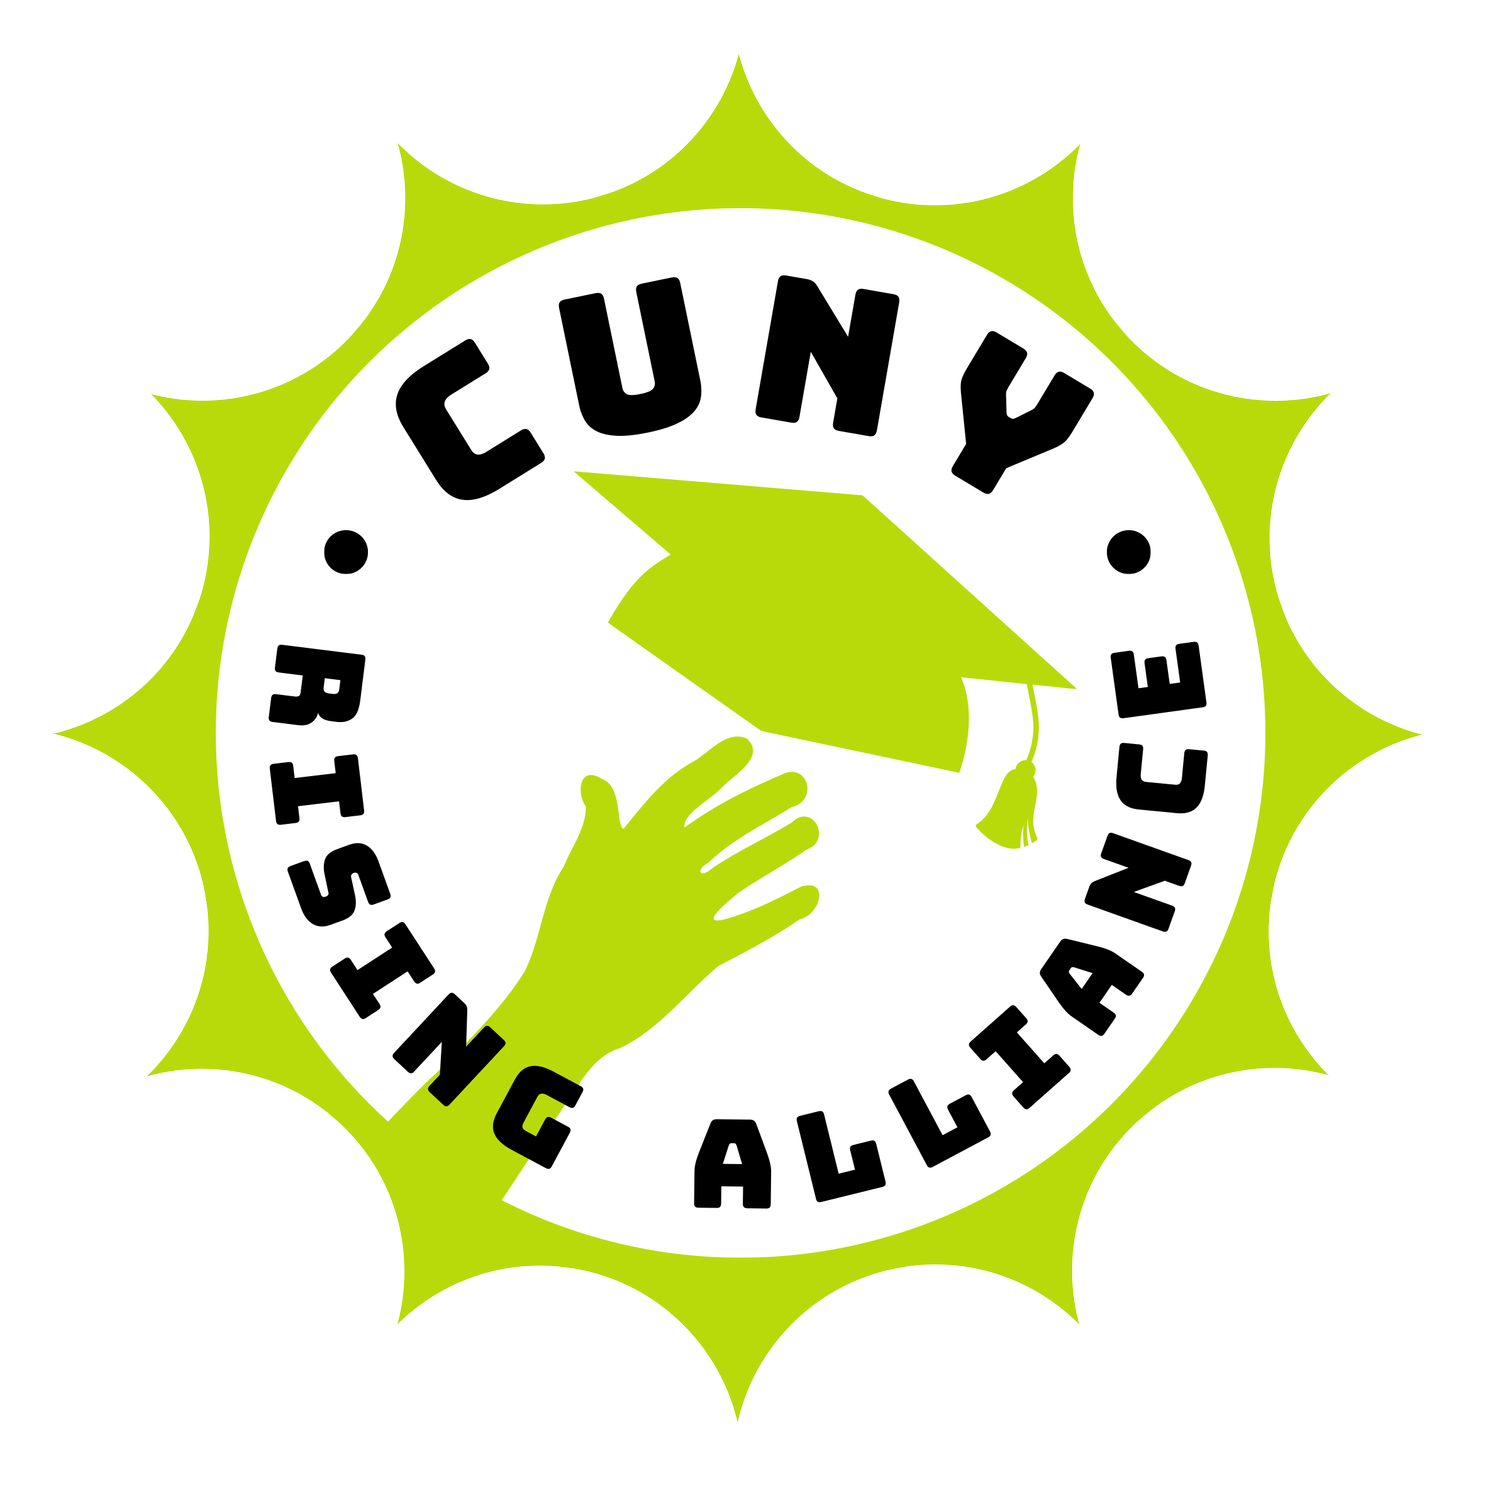 CUNY Rising Alliance